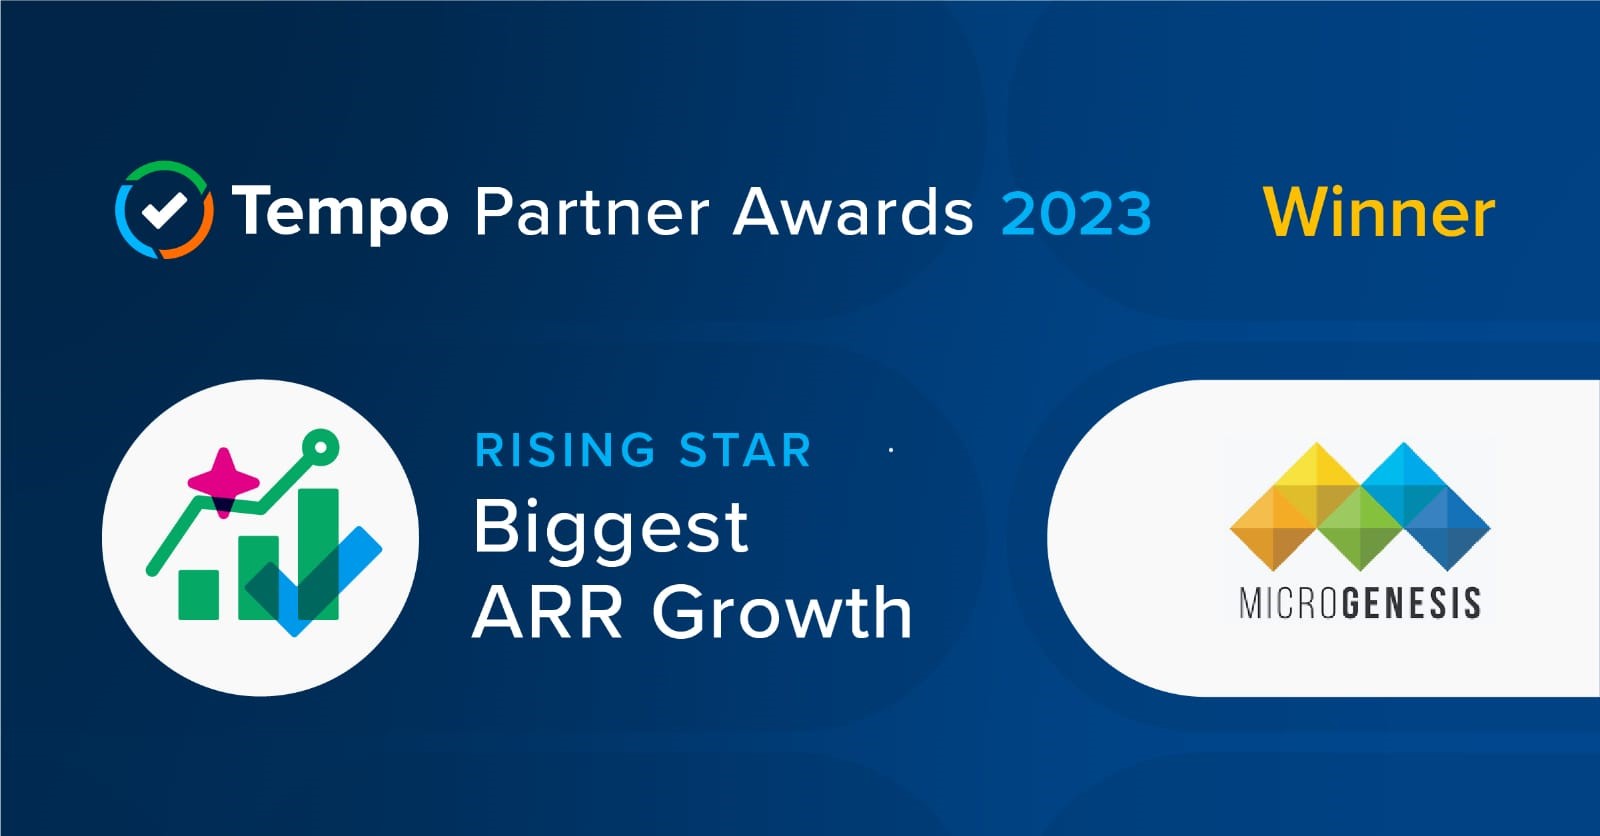 MicroGenesis TechSoft wins Fastest Growing Partner Award at 2023 Tempo Partner Awards. 